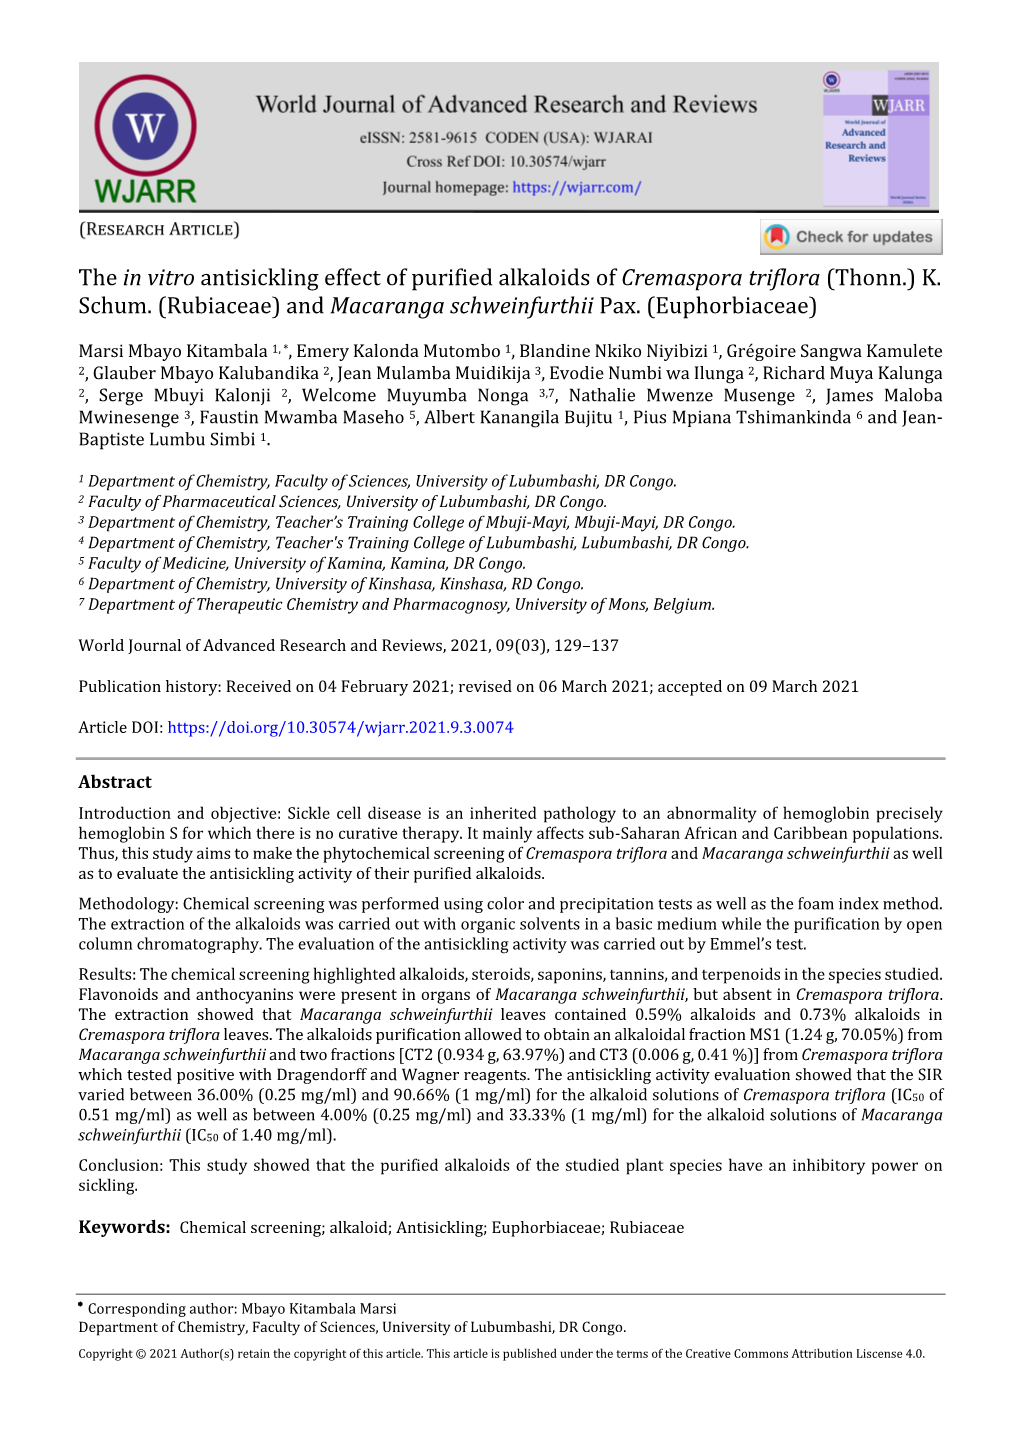 The in Vitro Antisickling Effect of Purified Alkaloids of Cremaspora Triflora (Thonn.) K